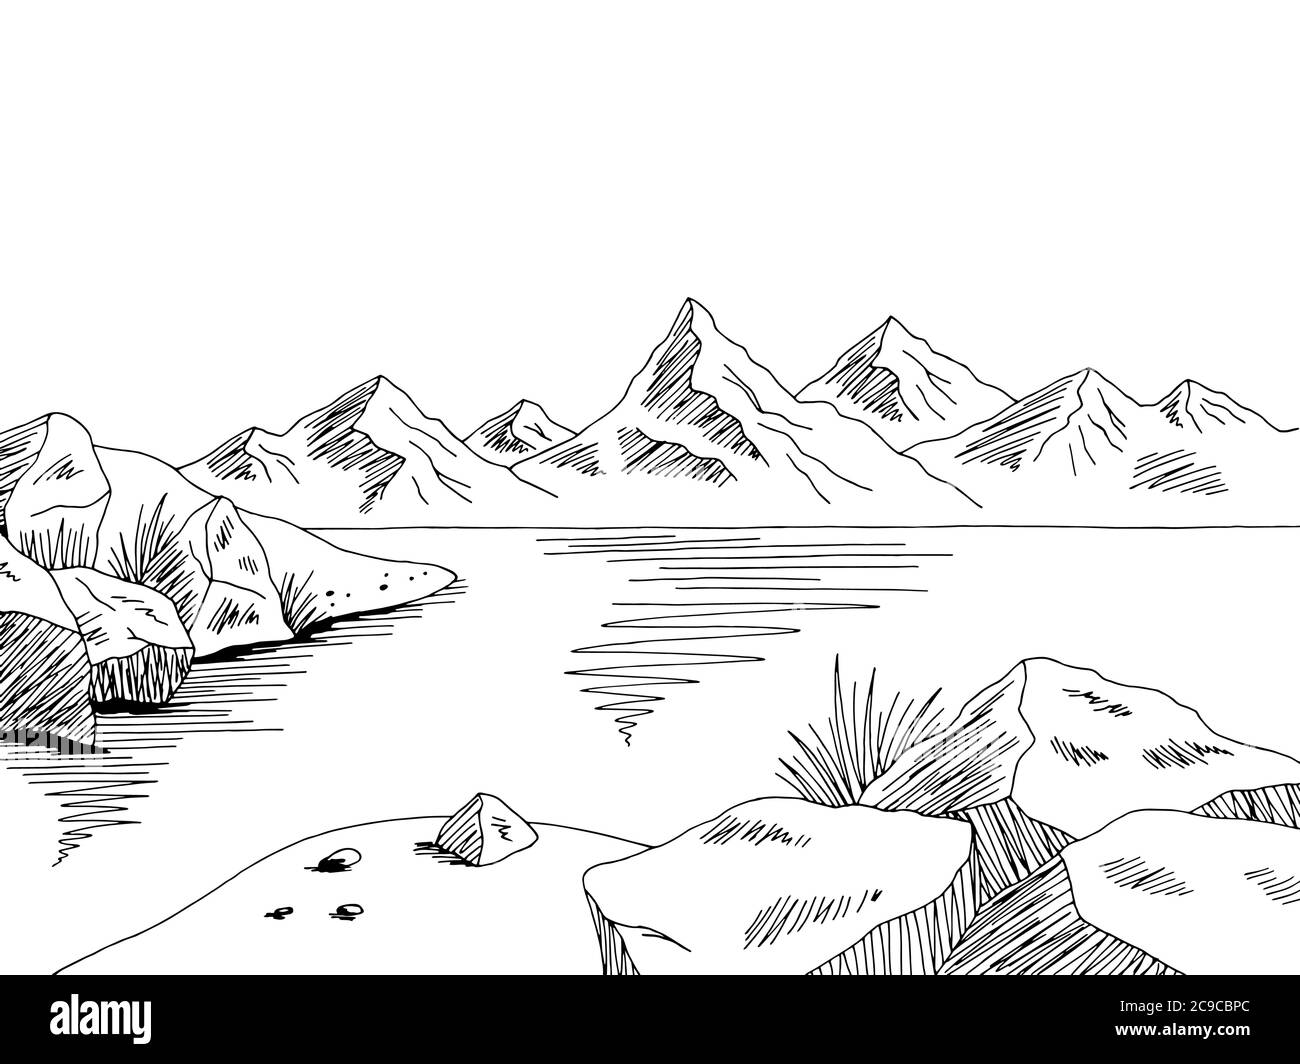 Cliff Meer Küste Grafik schwarz weiß Landschaft Skizze Illustration Vektor Stock Vektor